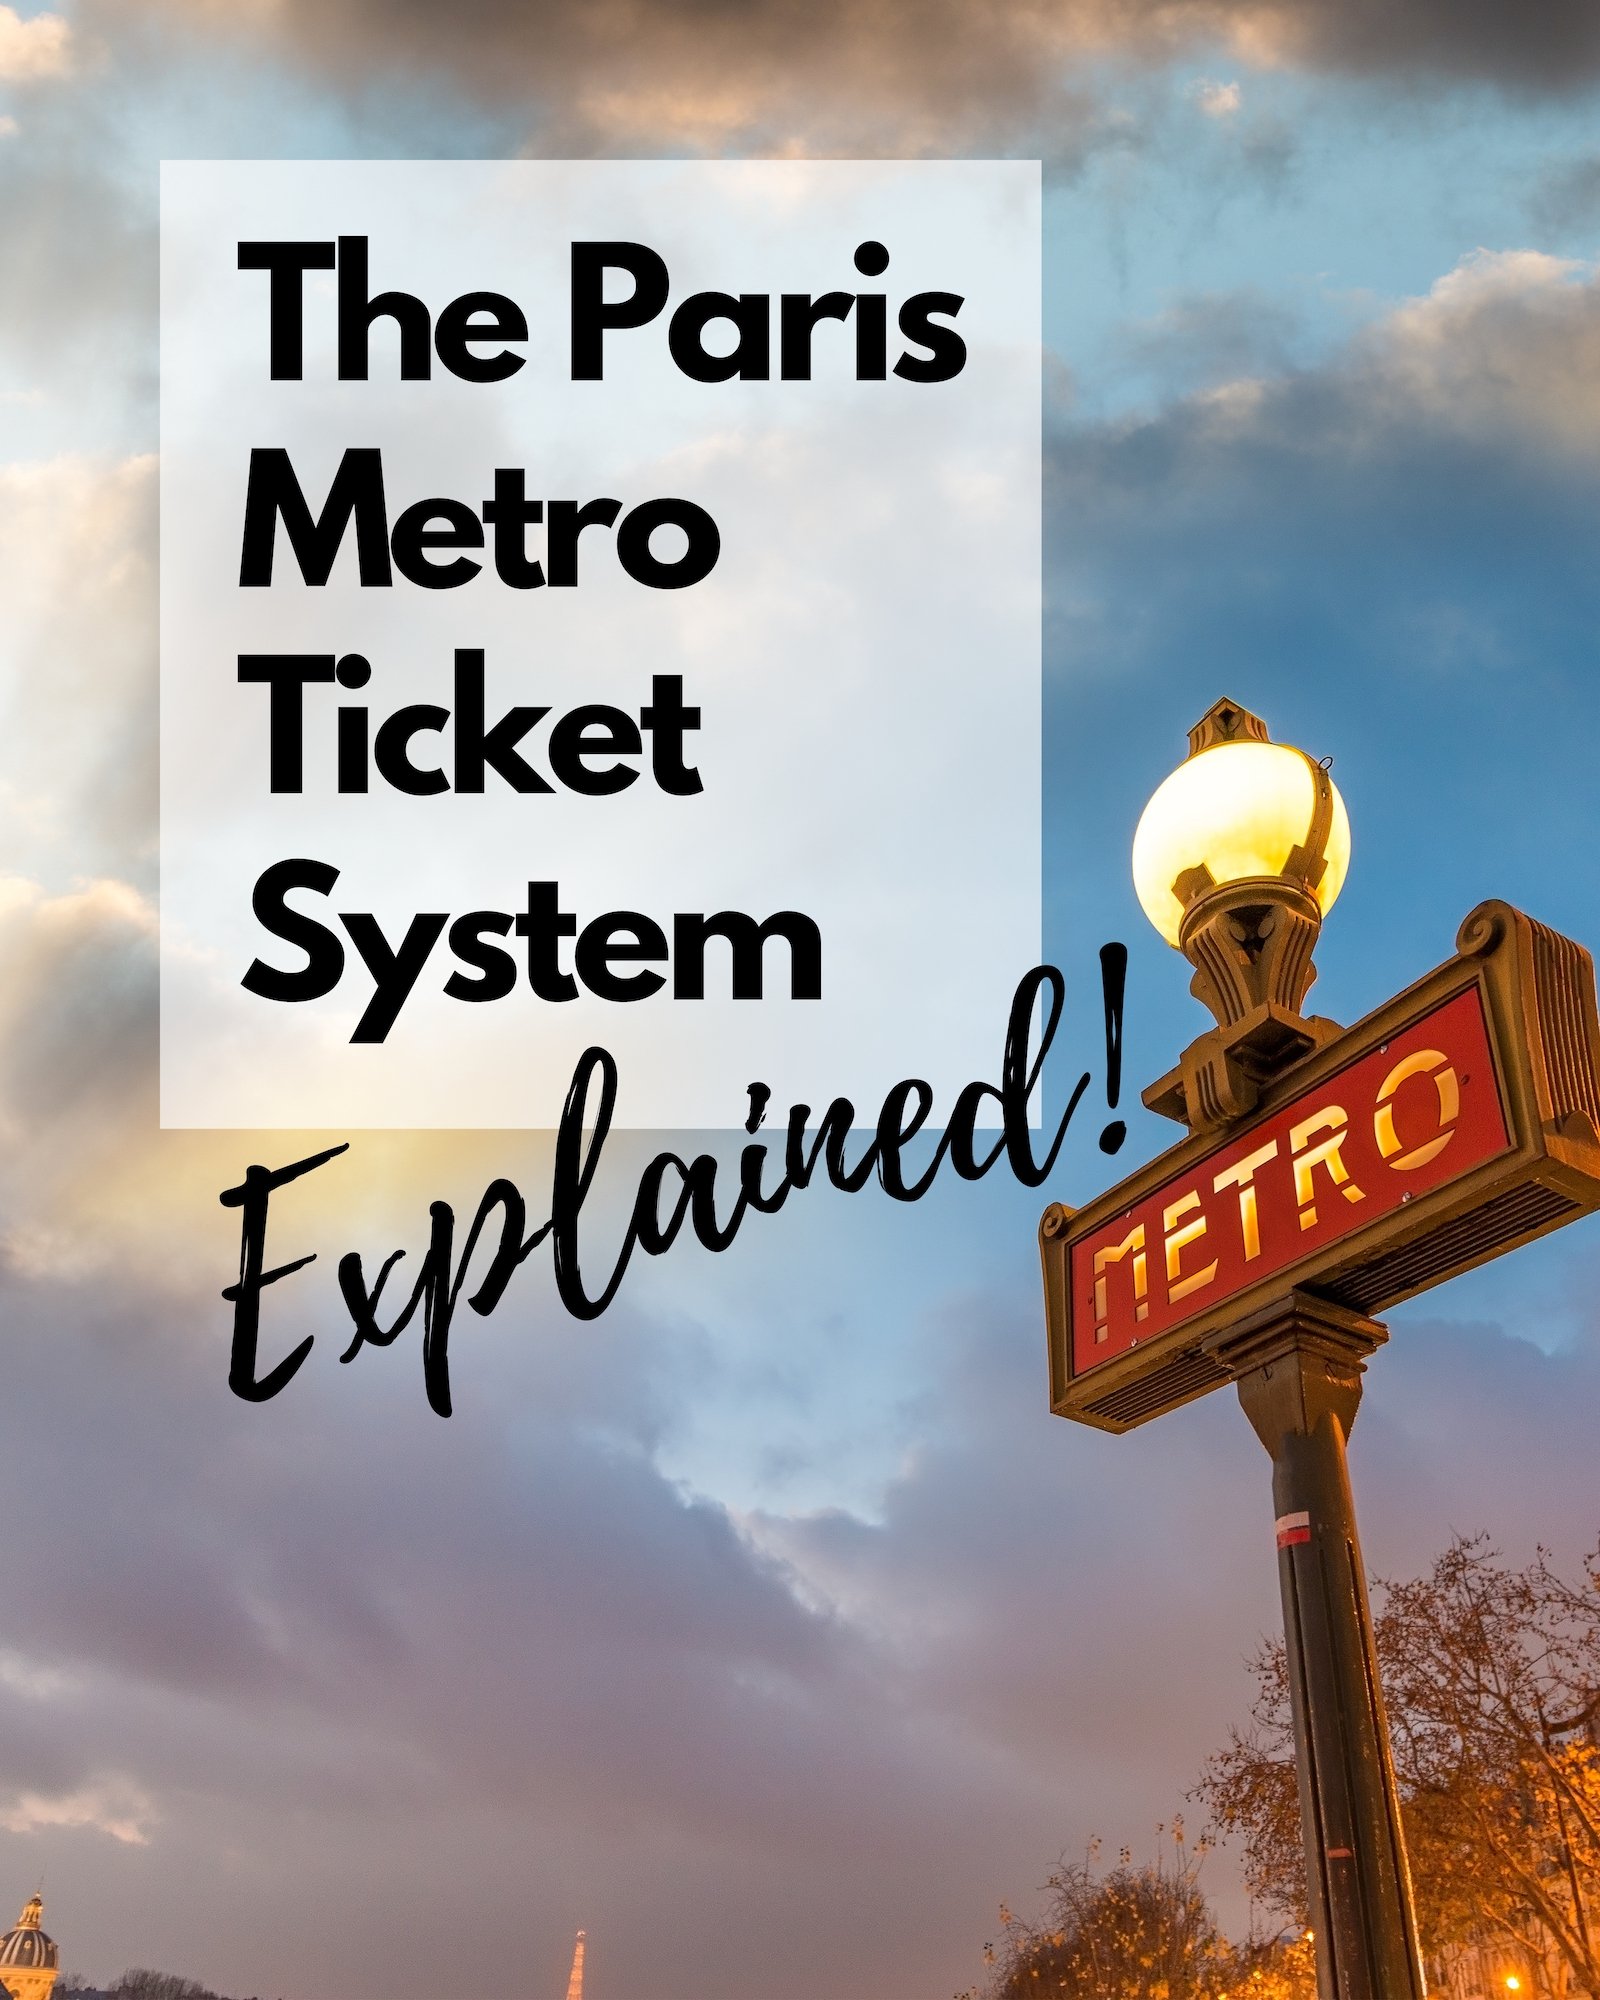 Paris Metro Tickets portrait featured Jan 2024 - paris metro ticket system 2024